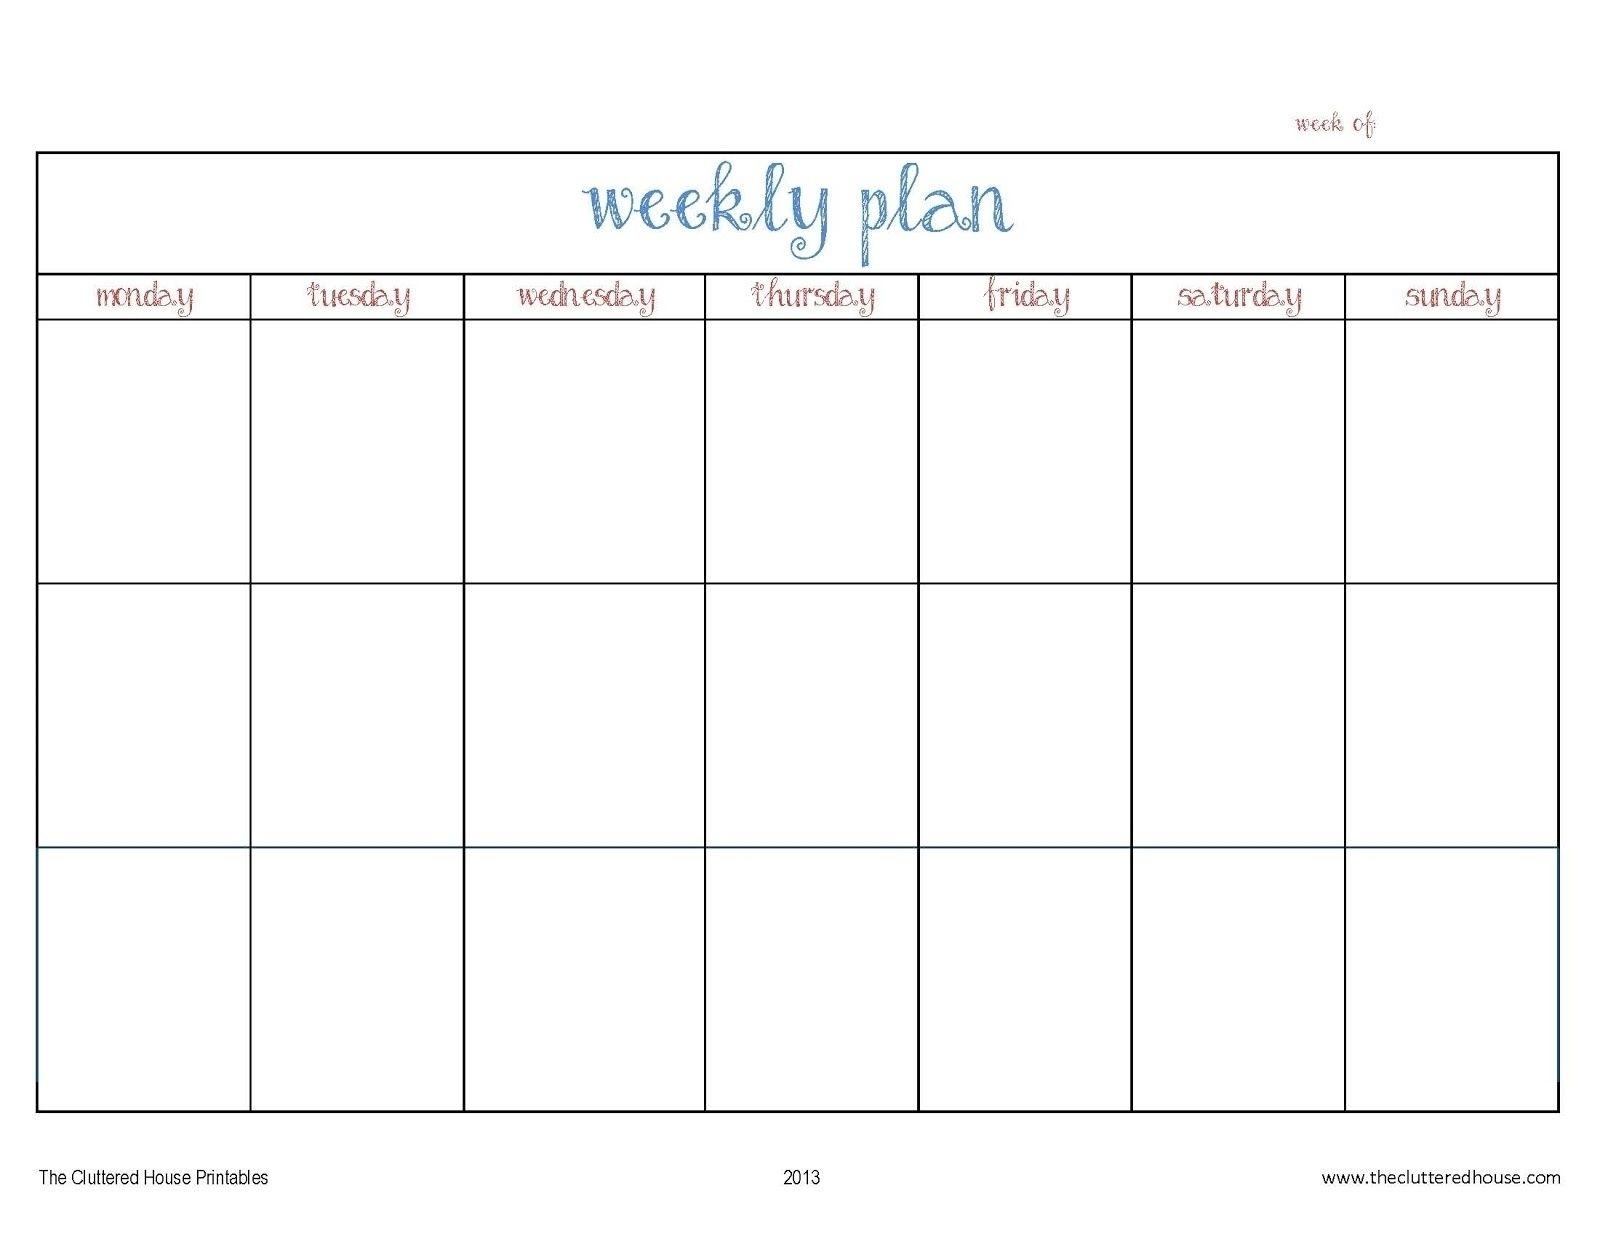 Day Lank Calendar Free Week Template Printable Schedule | Smorad with regard to 7 Day Calendar Template Free